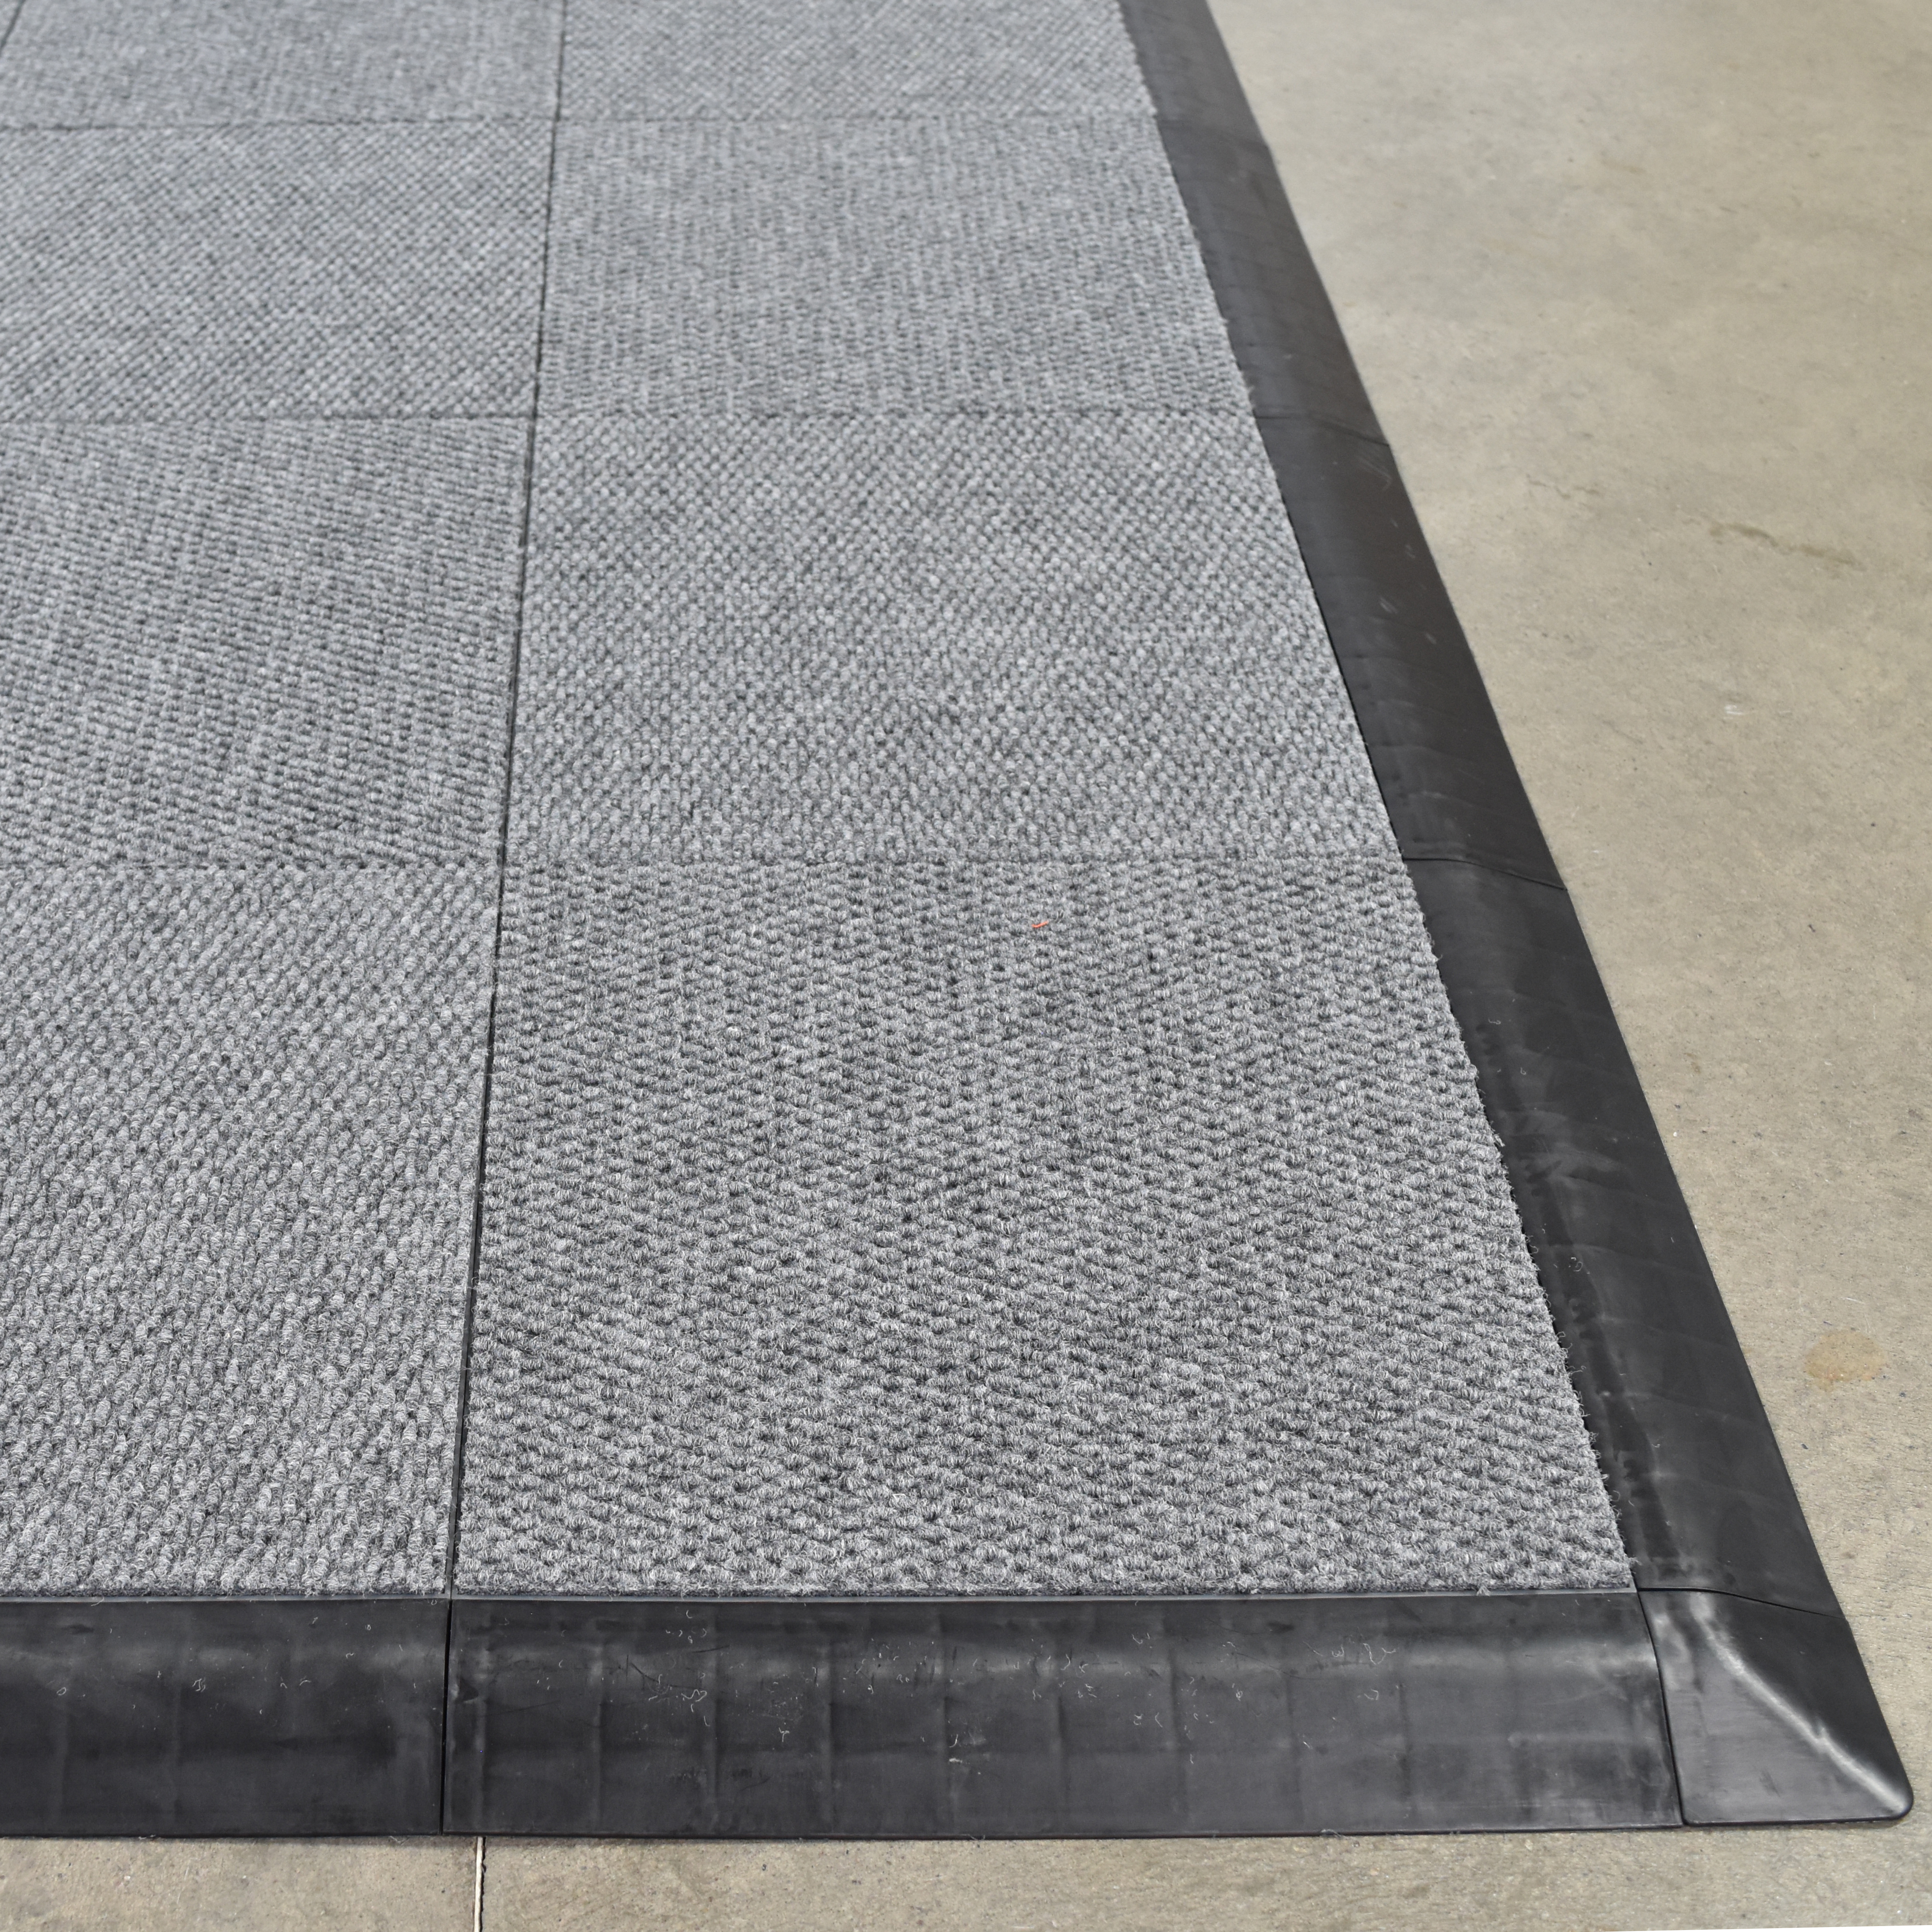 Carpet Square Modular Trade Show Tiles 20x20 Ft. Kit gray corner with borders